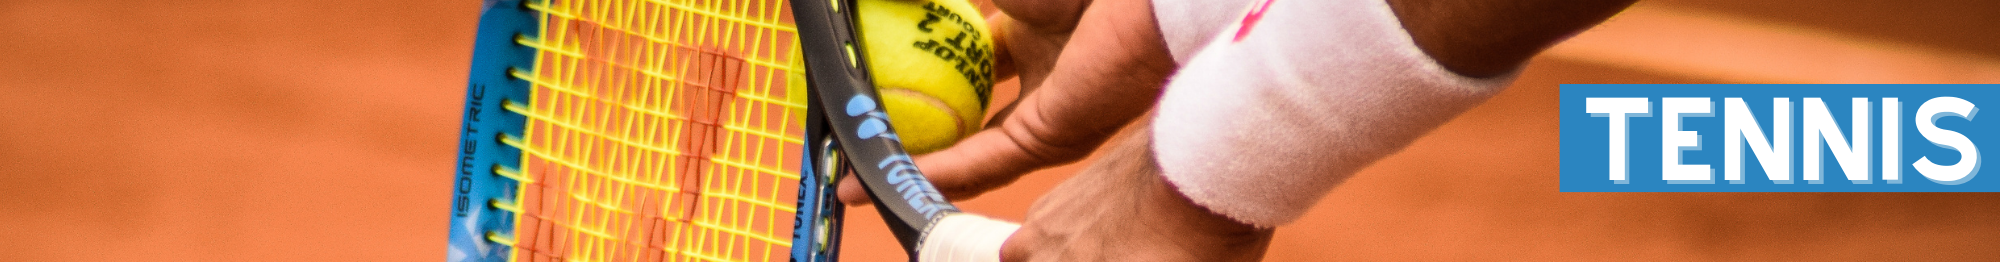 Tennis18